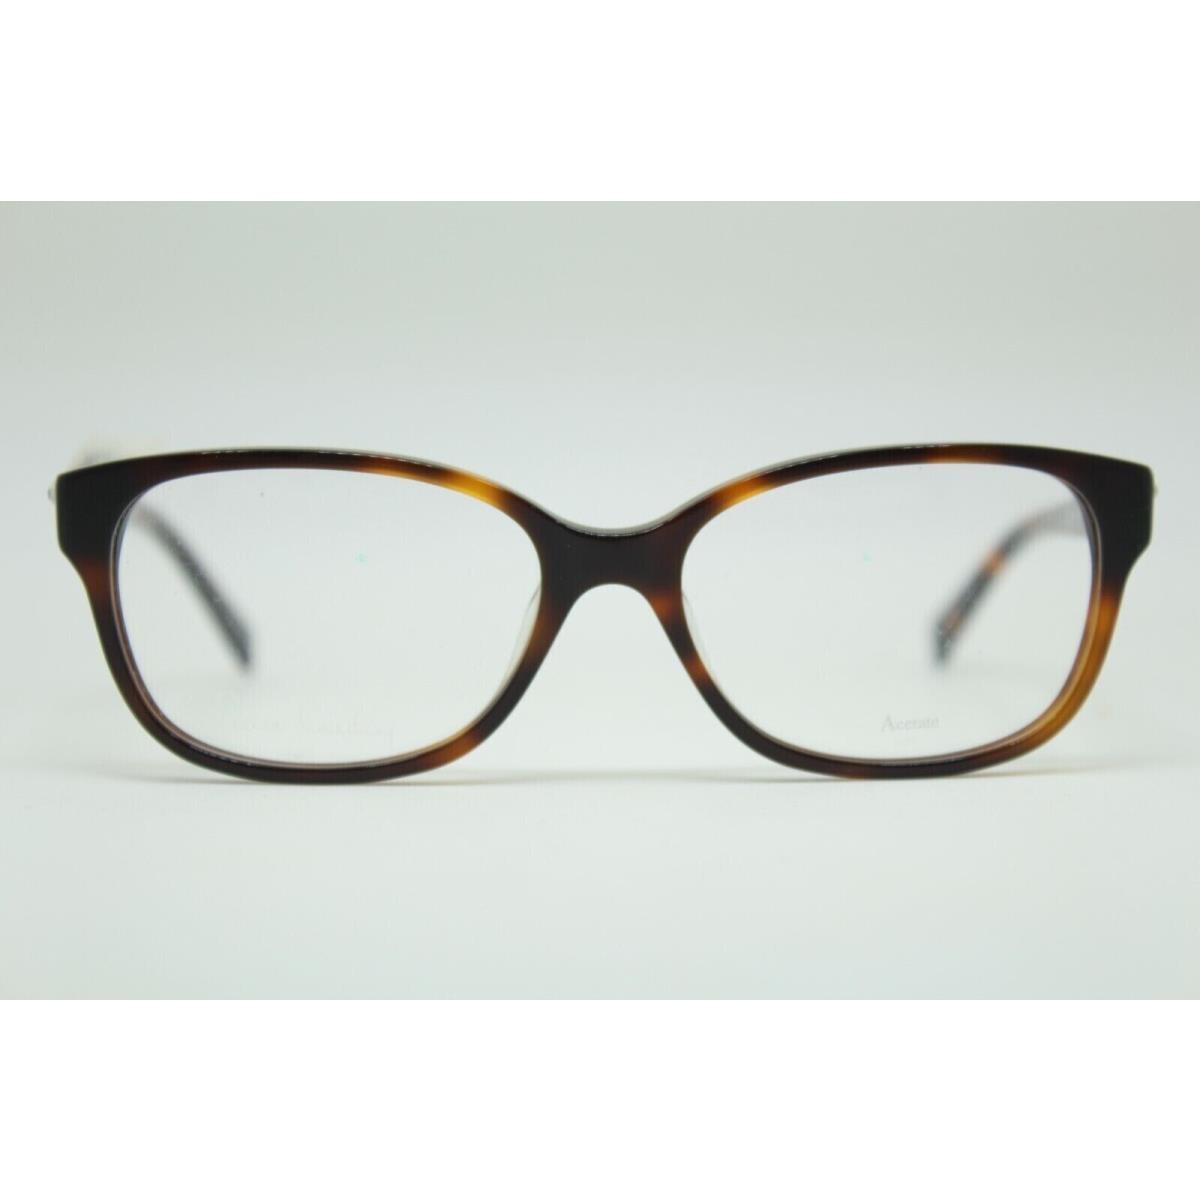 1 Unit Pierre Cardin Havana Eyeglass Frame 53-16-140 180